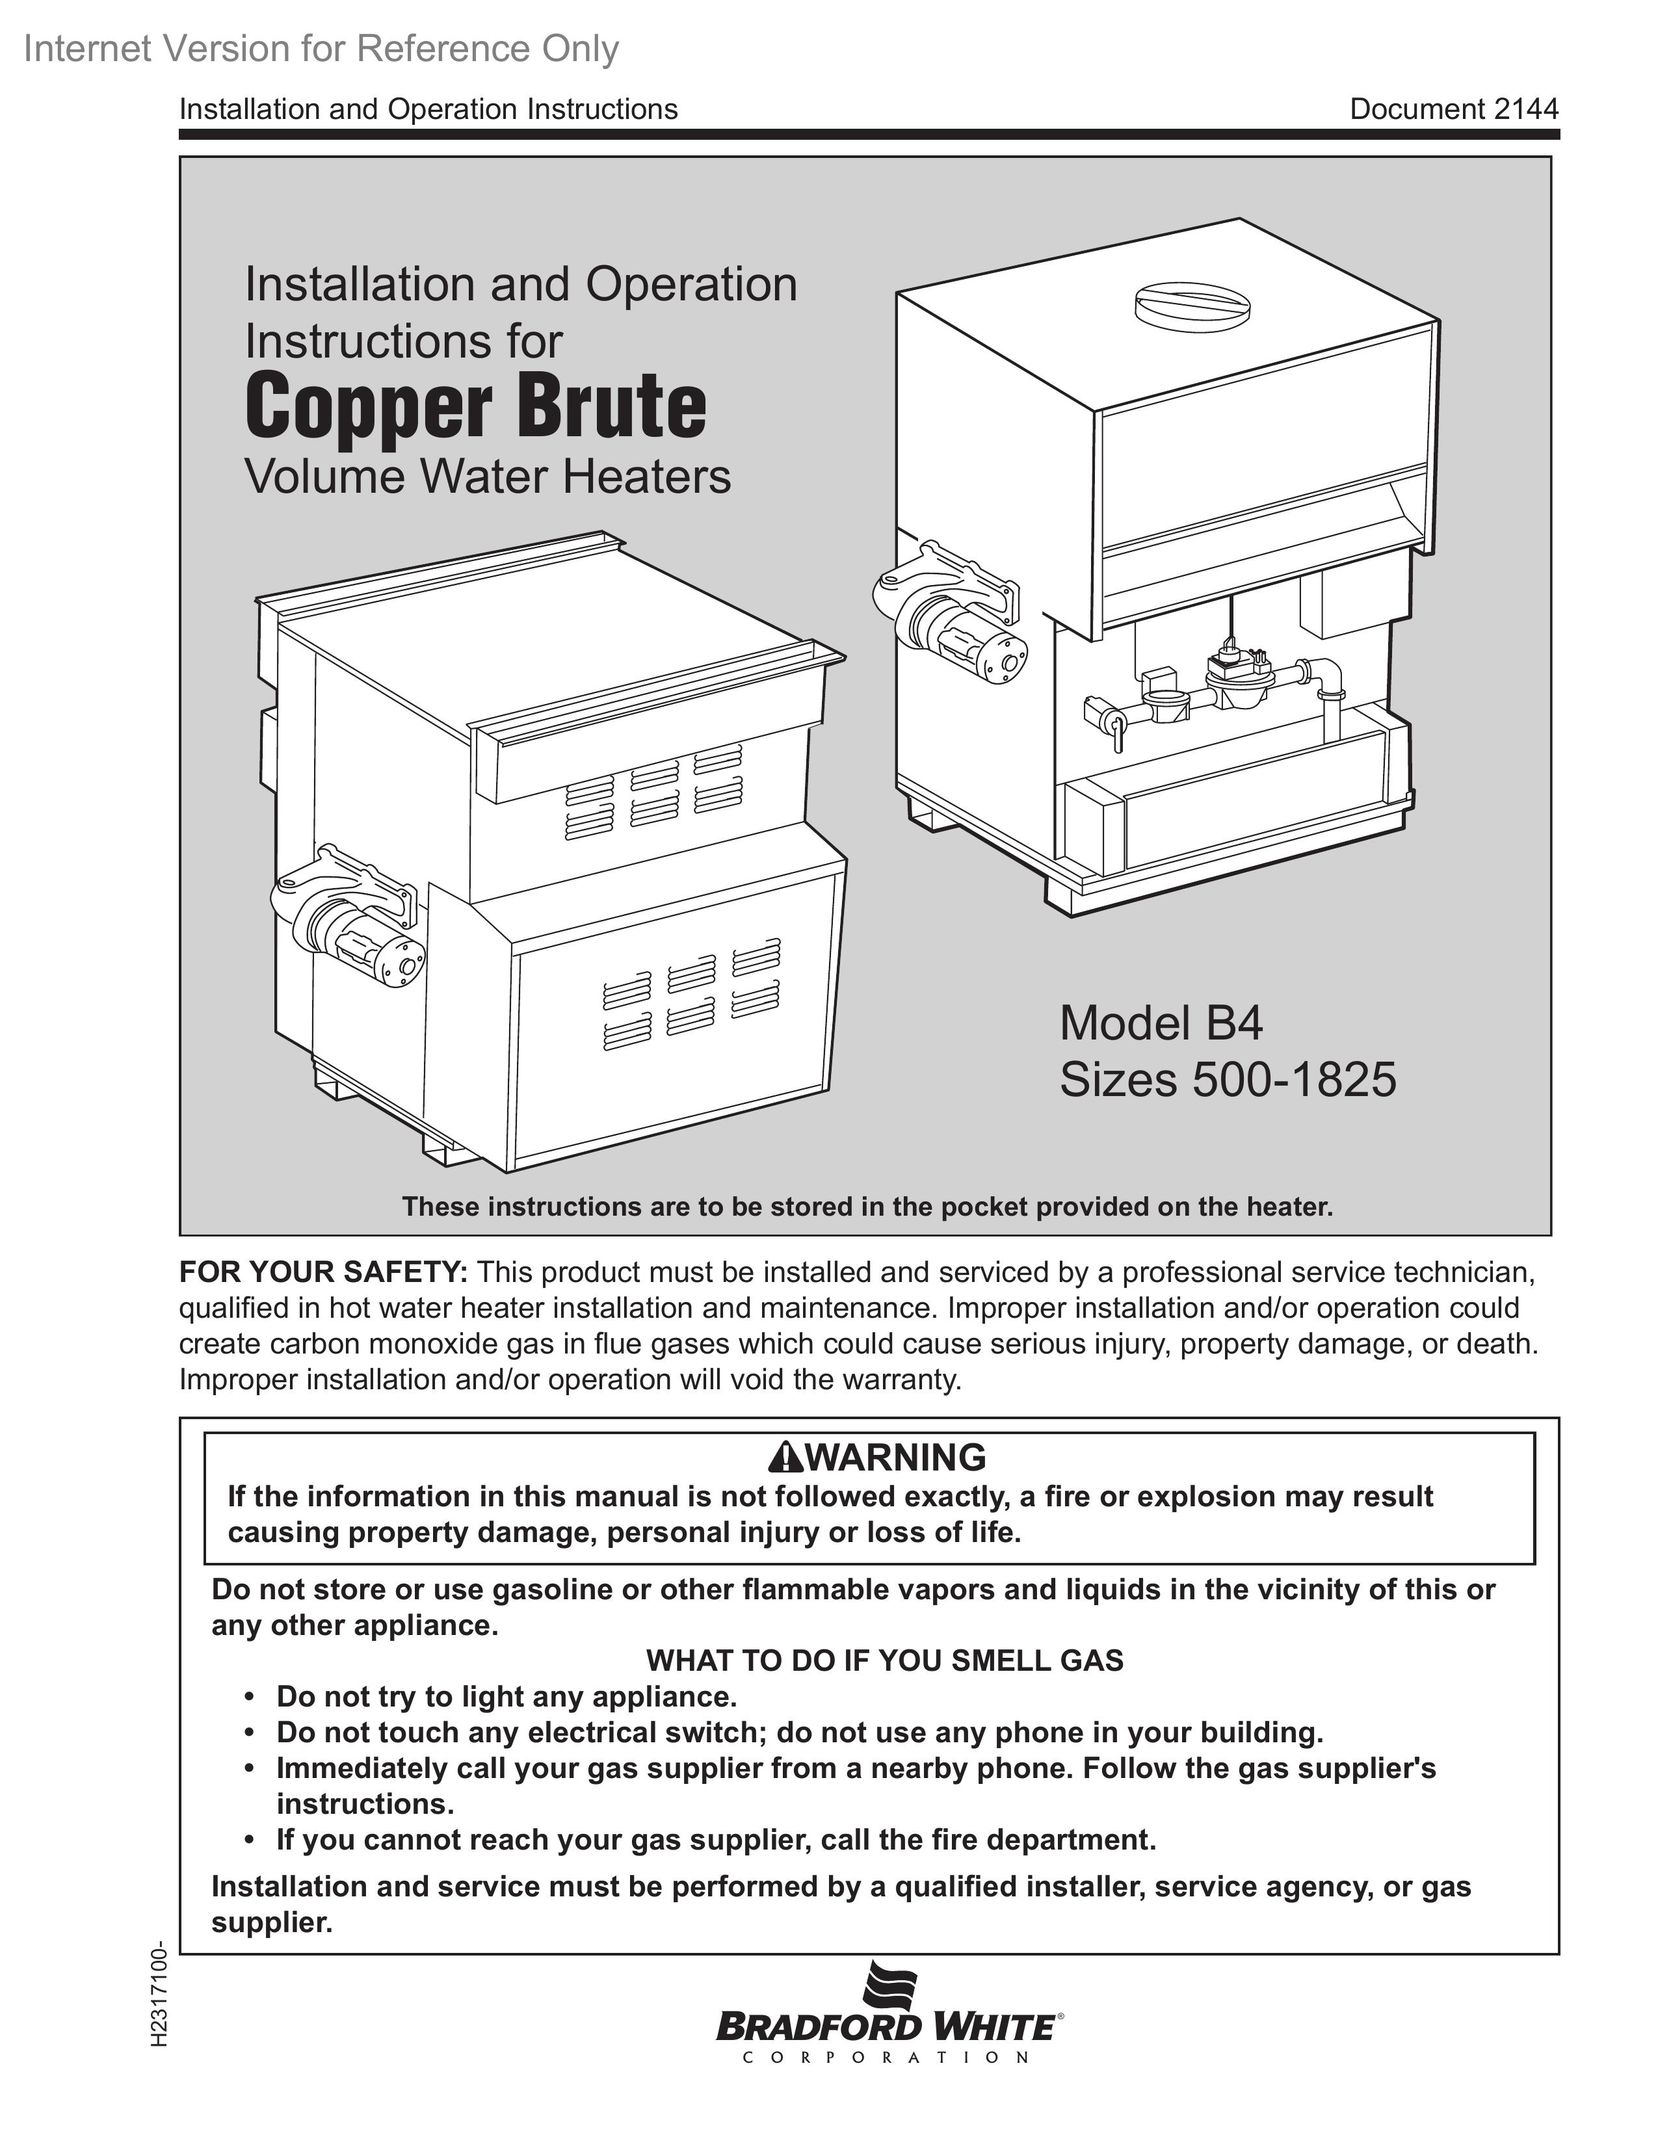 Bradford-White Corp 500-1825 Water Heater User Manual